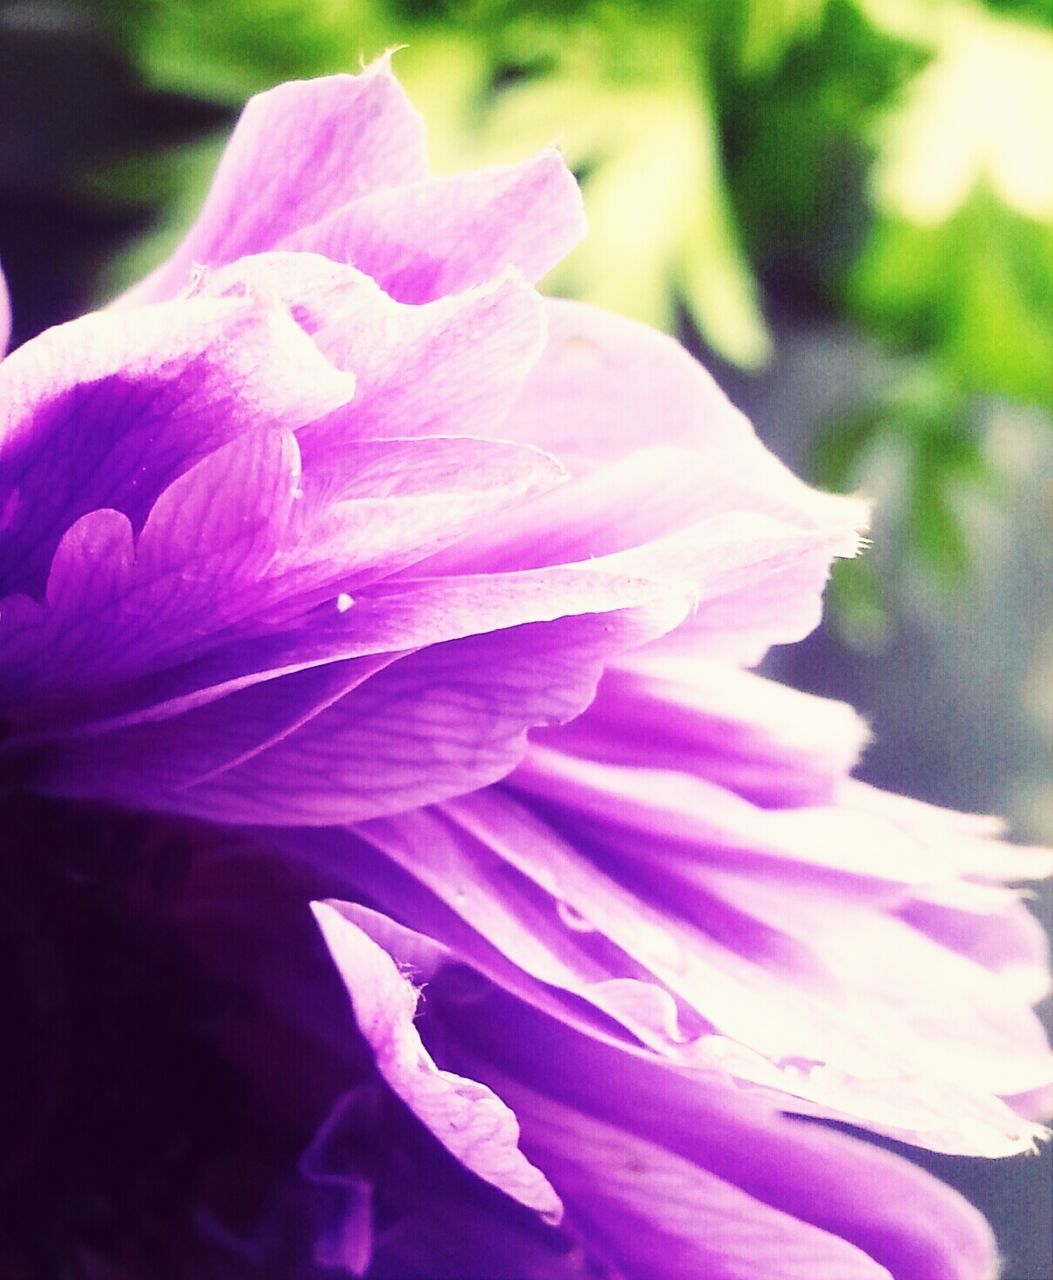 Petals of purple flower